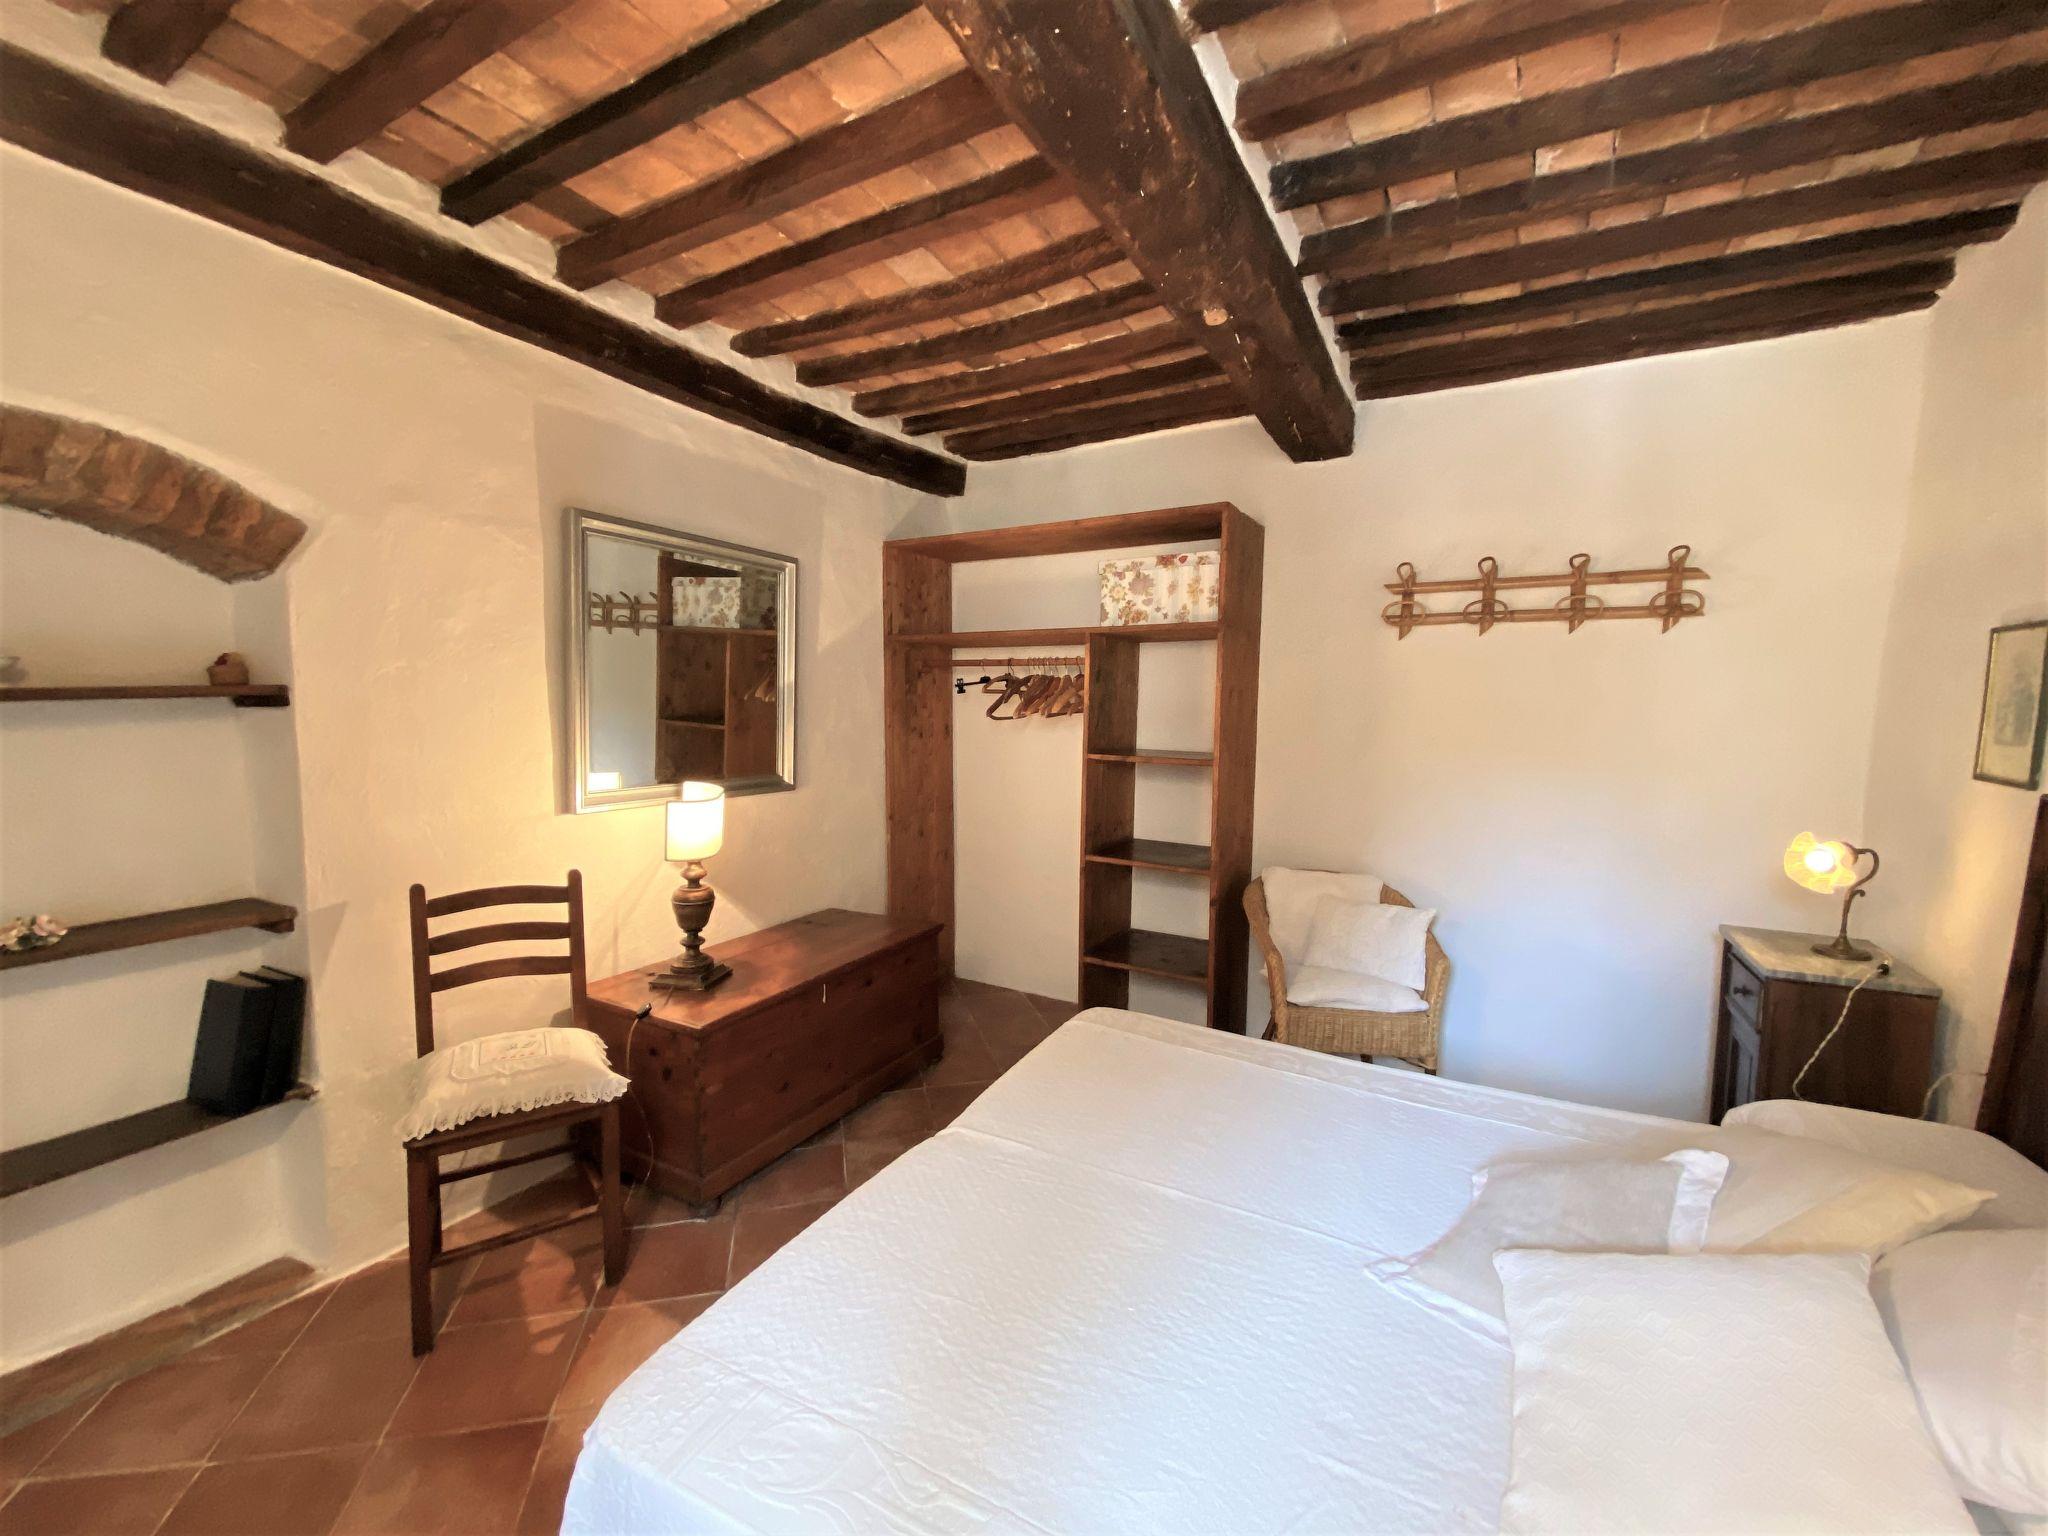 Photo 10 - Appartement de 2 chambres à Montecatini Val di Cecina avec jardin